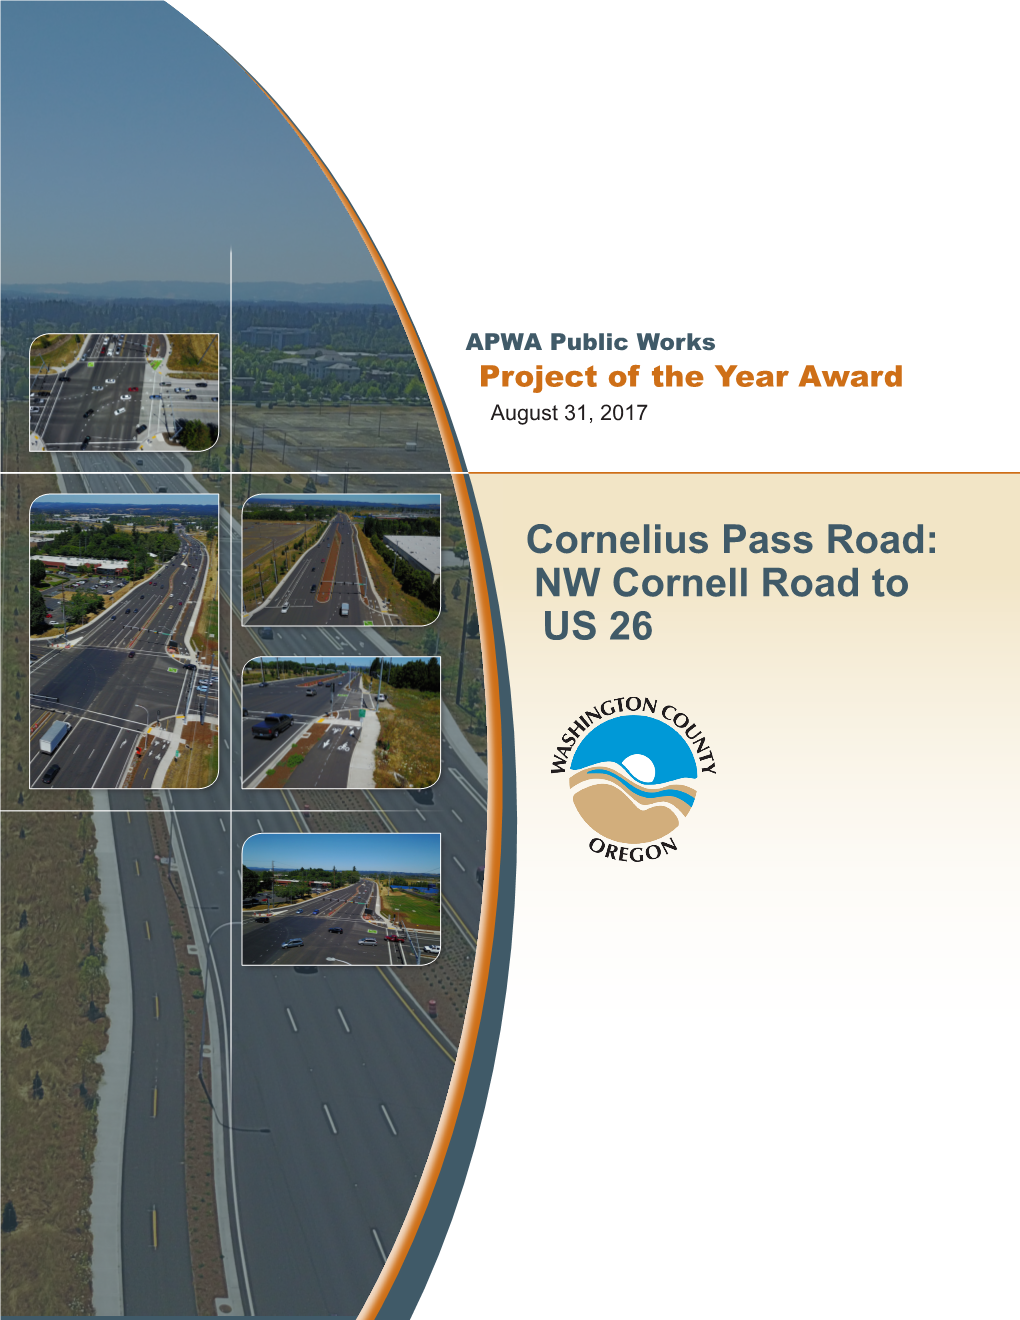 Cornelius Pass Road: NW Cornell Road to US 26 Washington County Cornelius Pass Road: NW Cornell Road to US 26 1 1